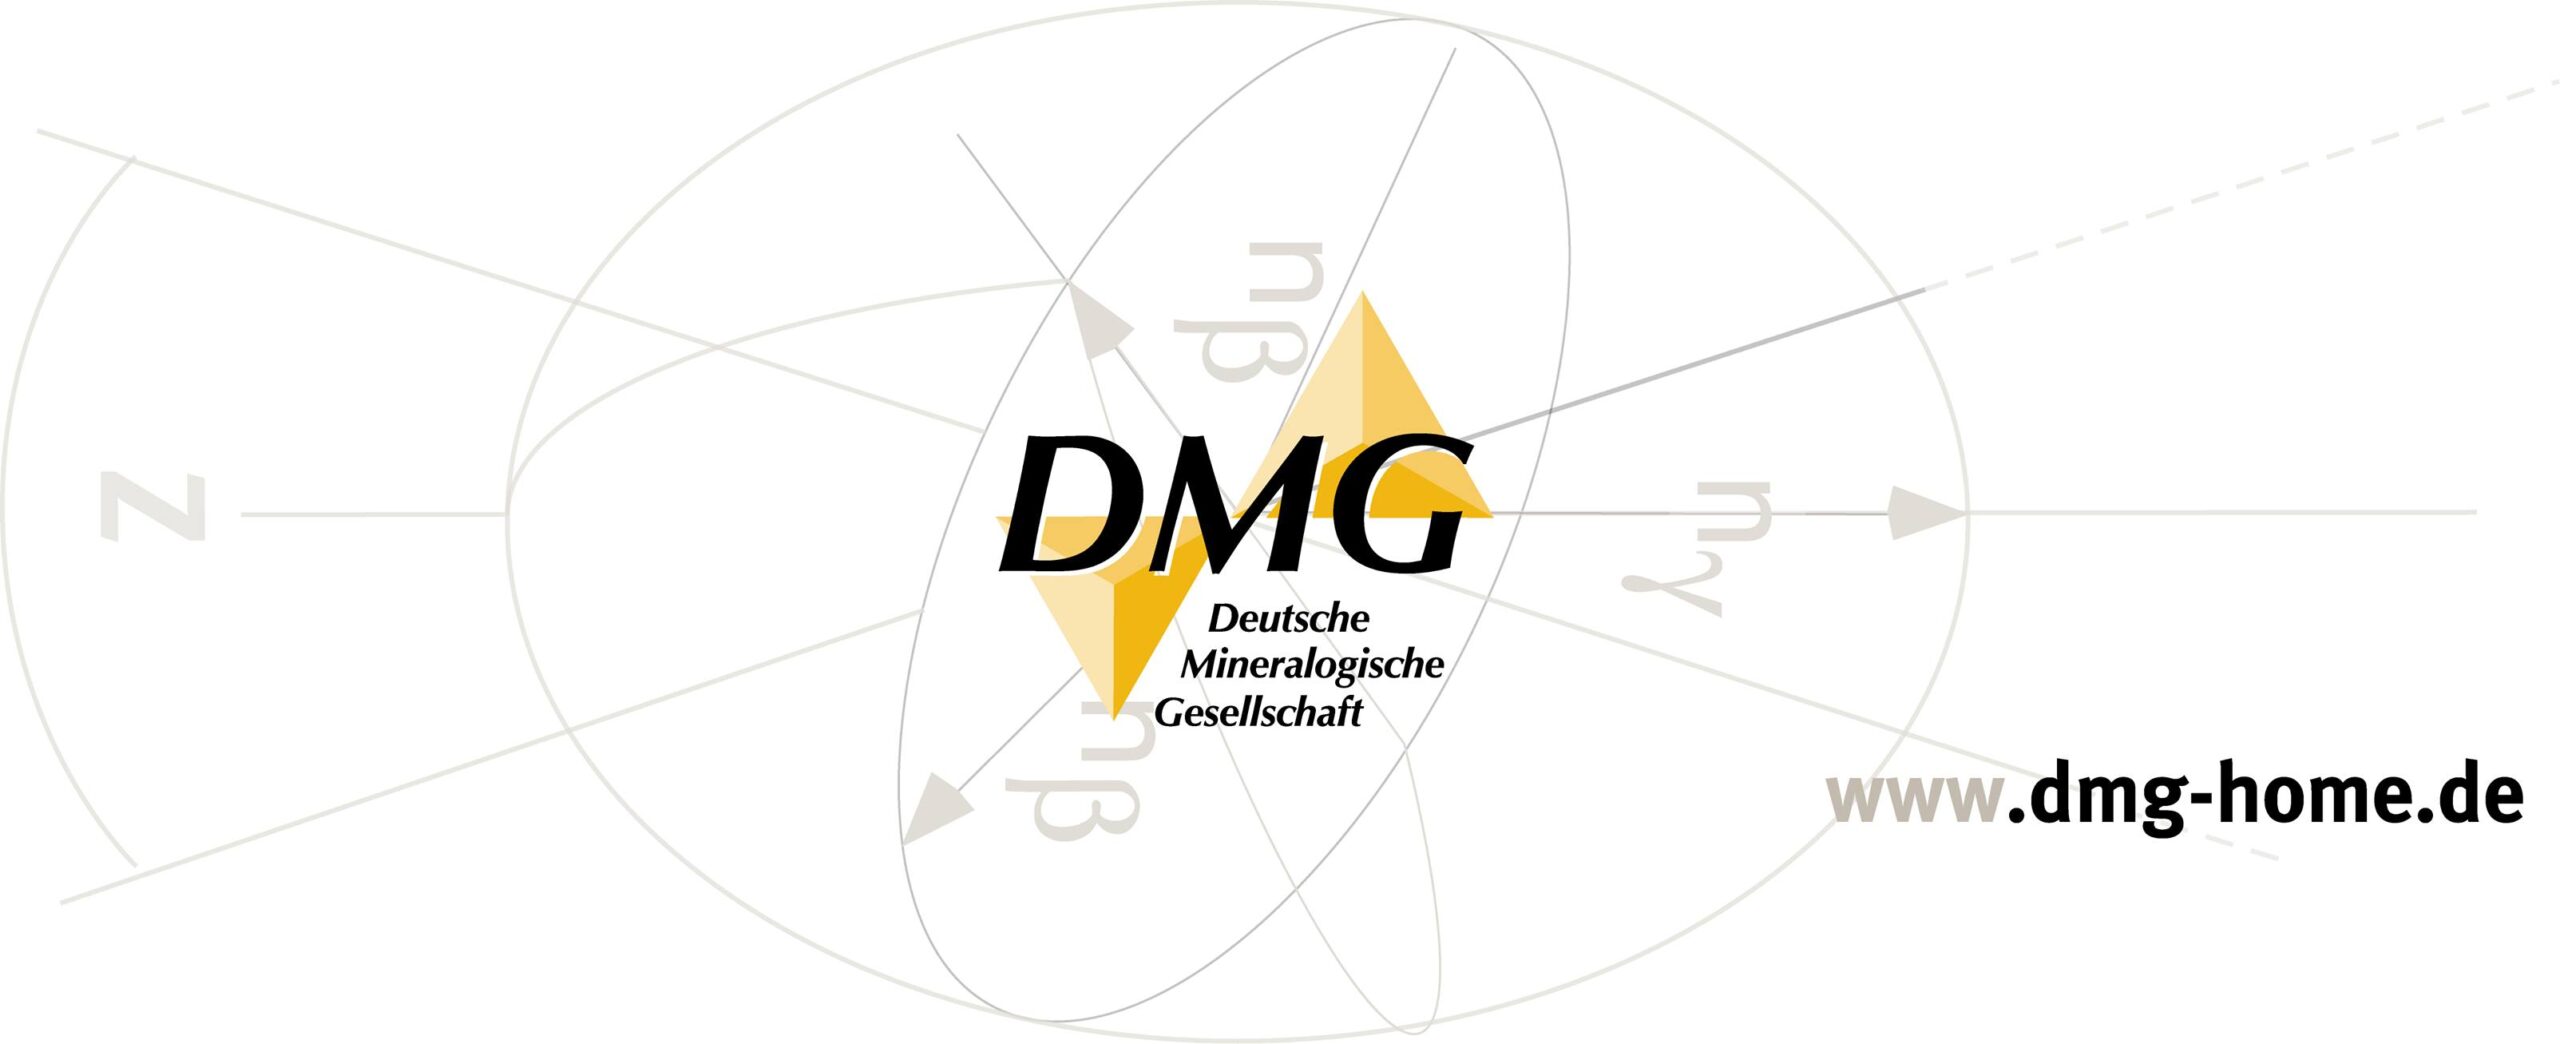 DMG-Short Course "Doktorandenkurs"